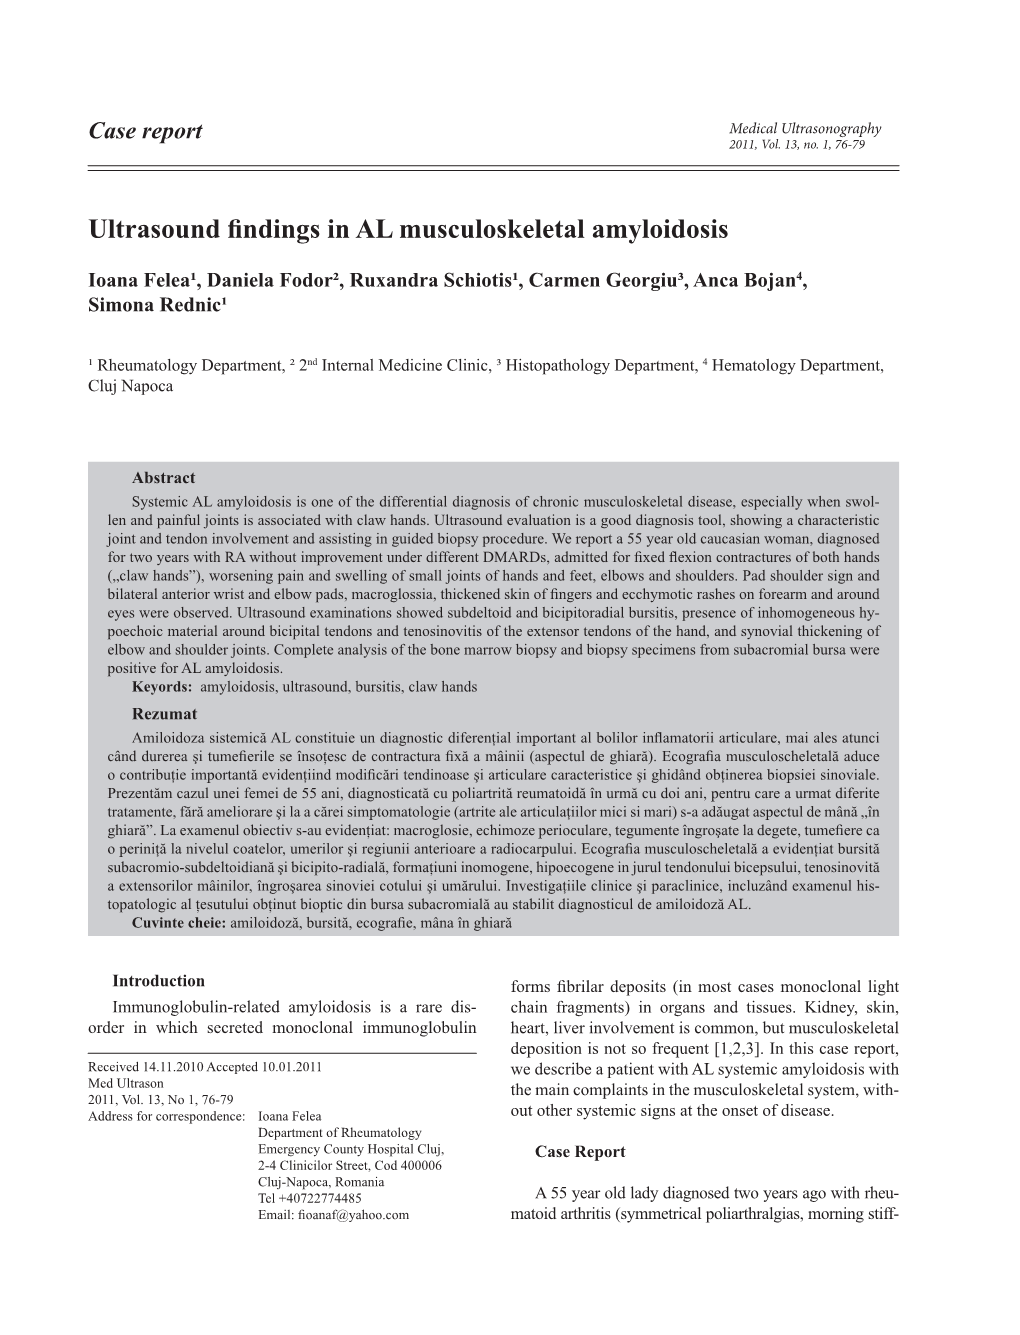 Ultrasound Findings in AL Musculoskeletal Amyloidosis